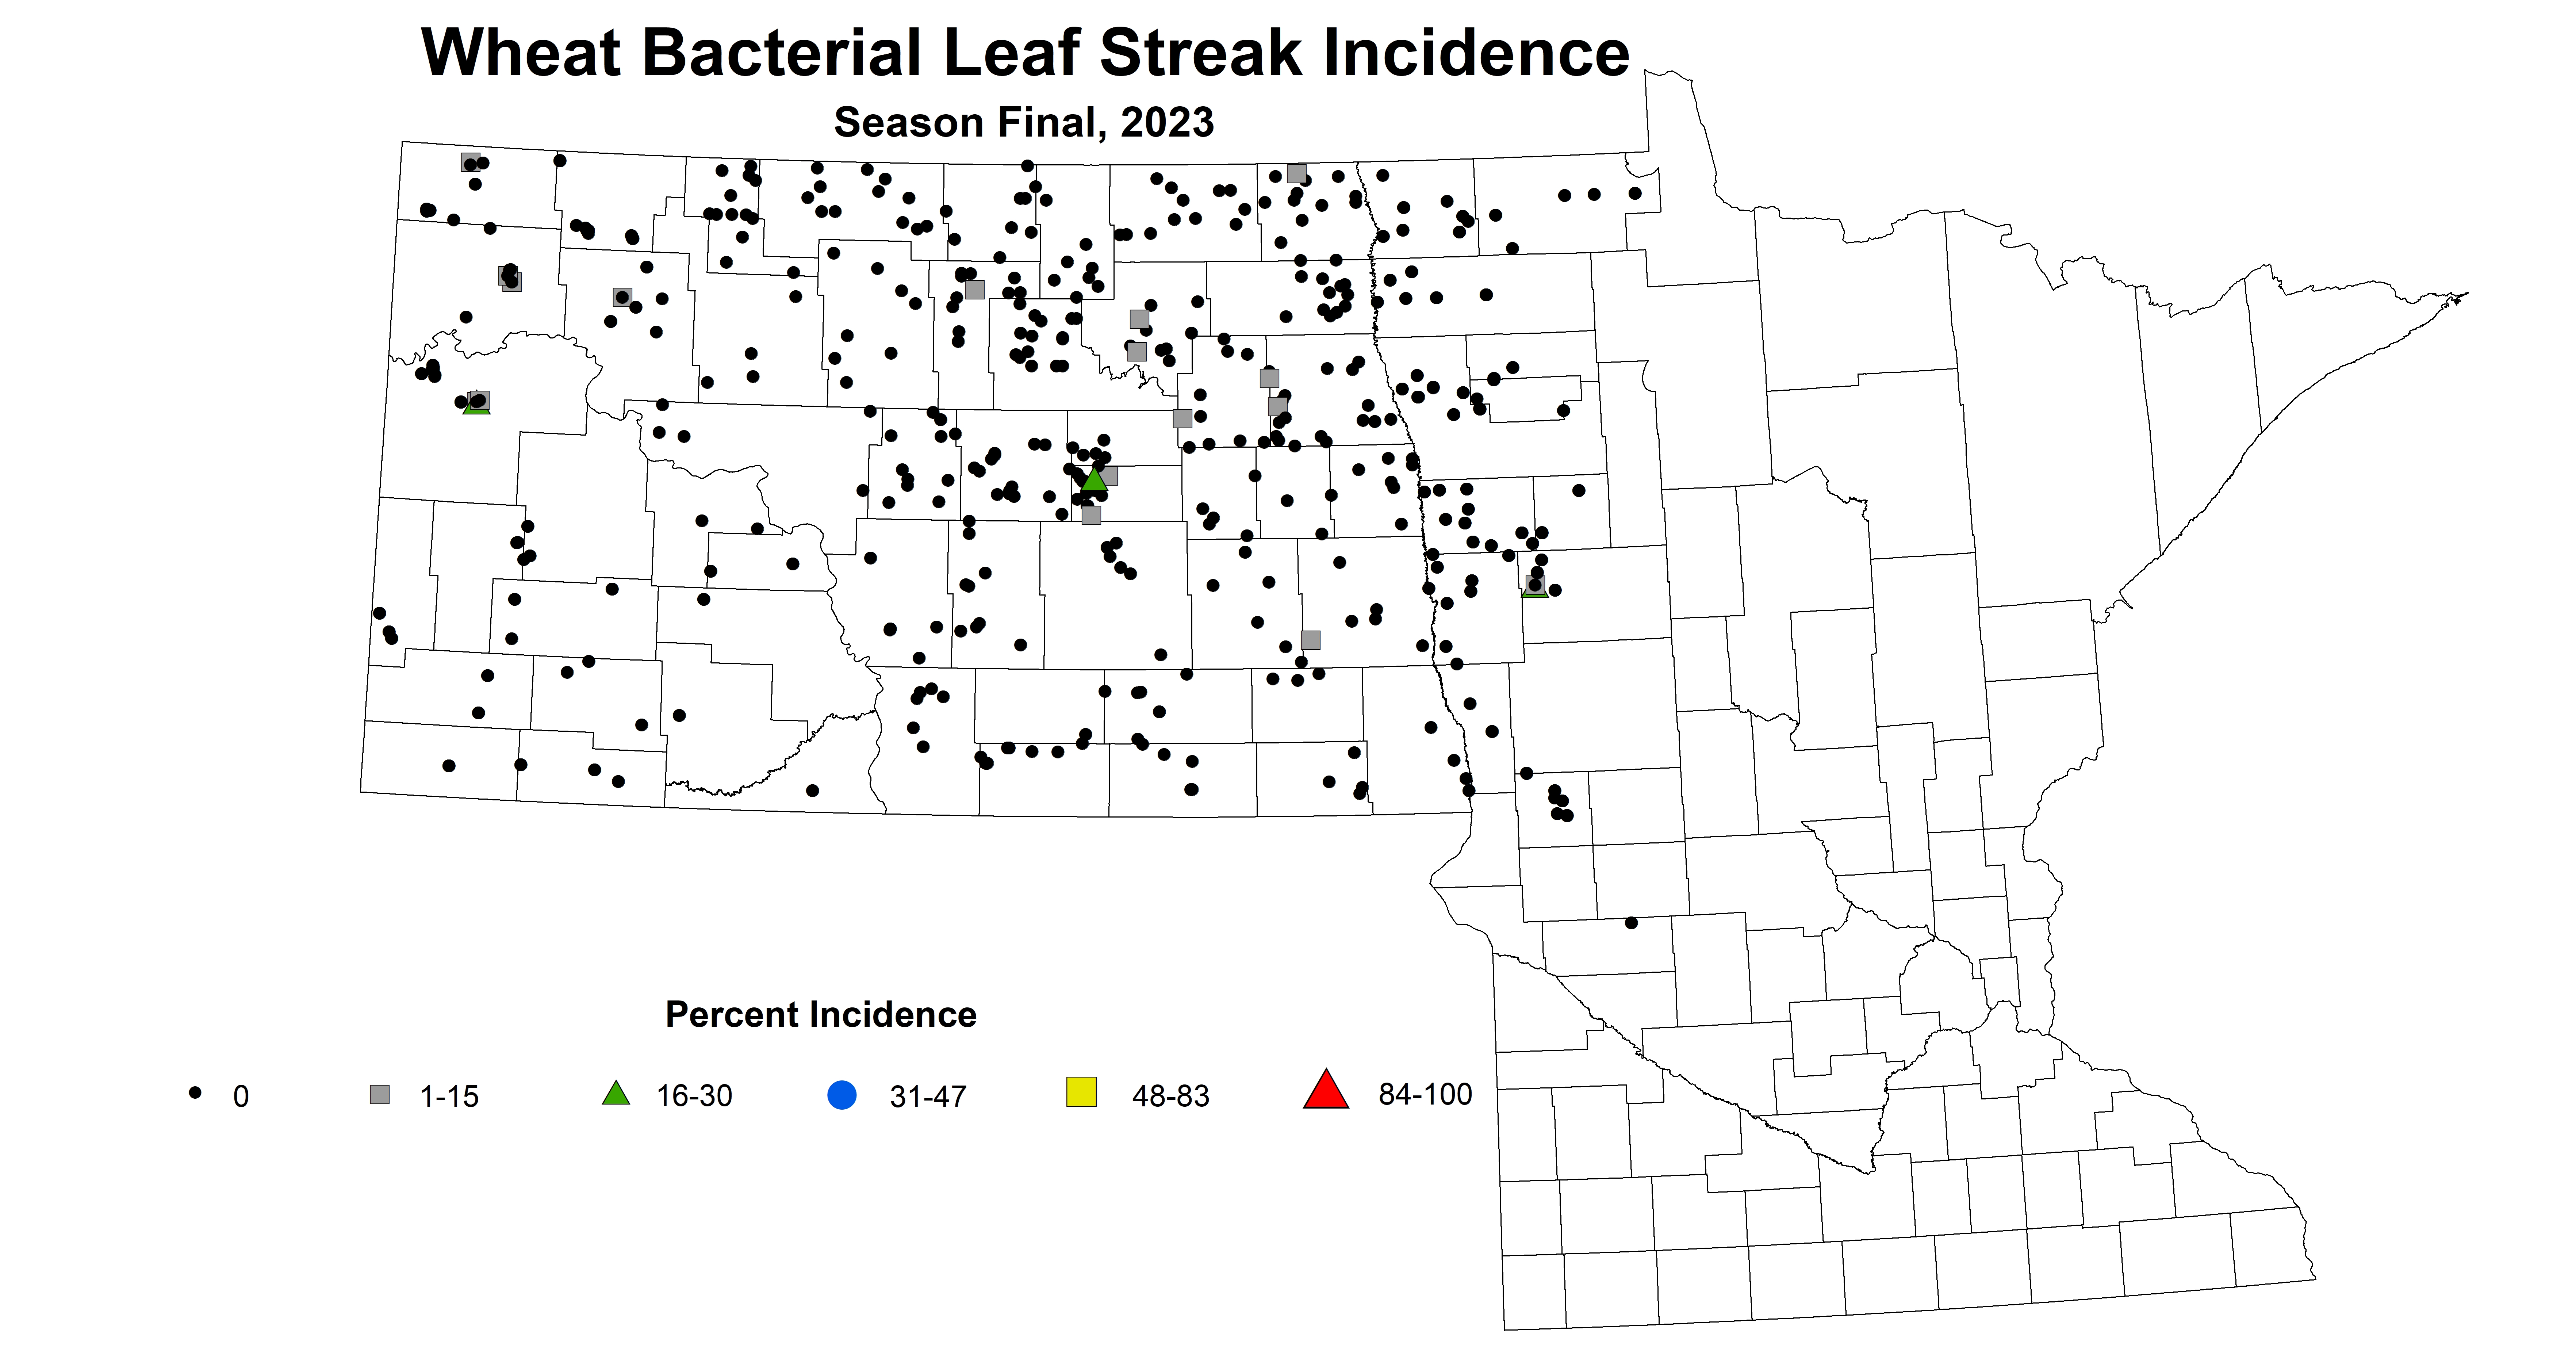 wheat bacterial leaf streak incidence season final 2023